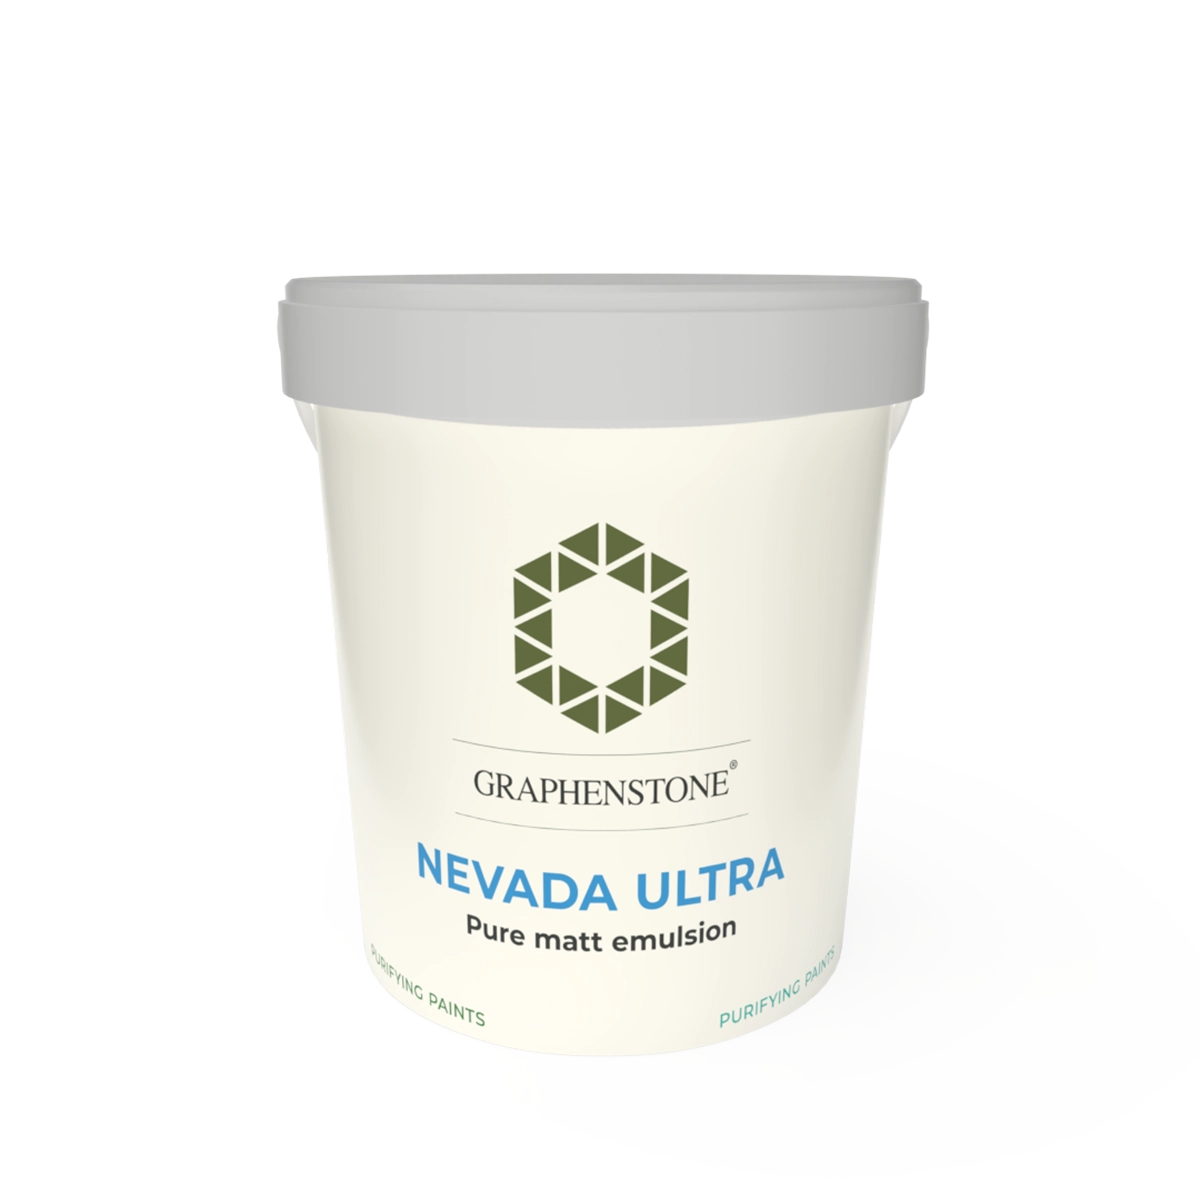 Nevada Ultra Colour - Economical eco friendly trade paint